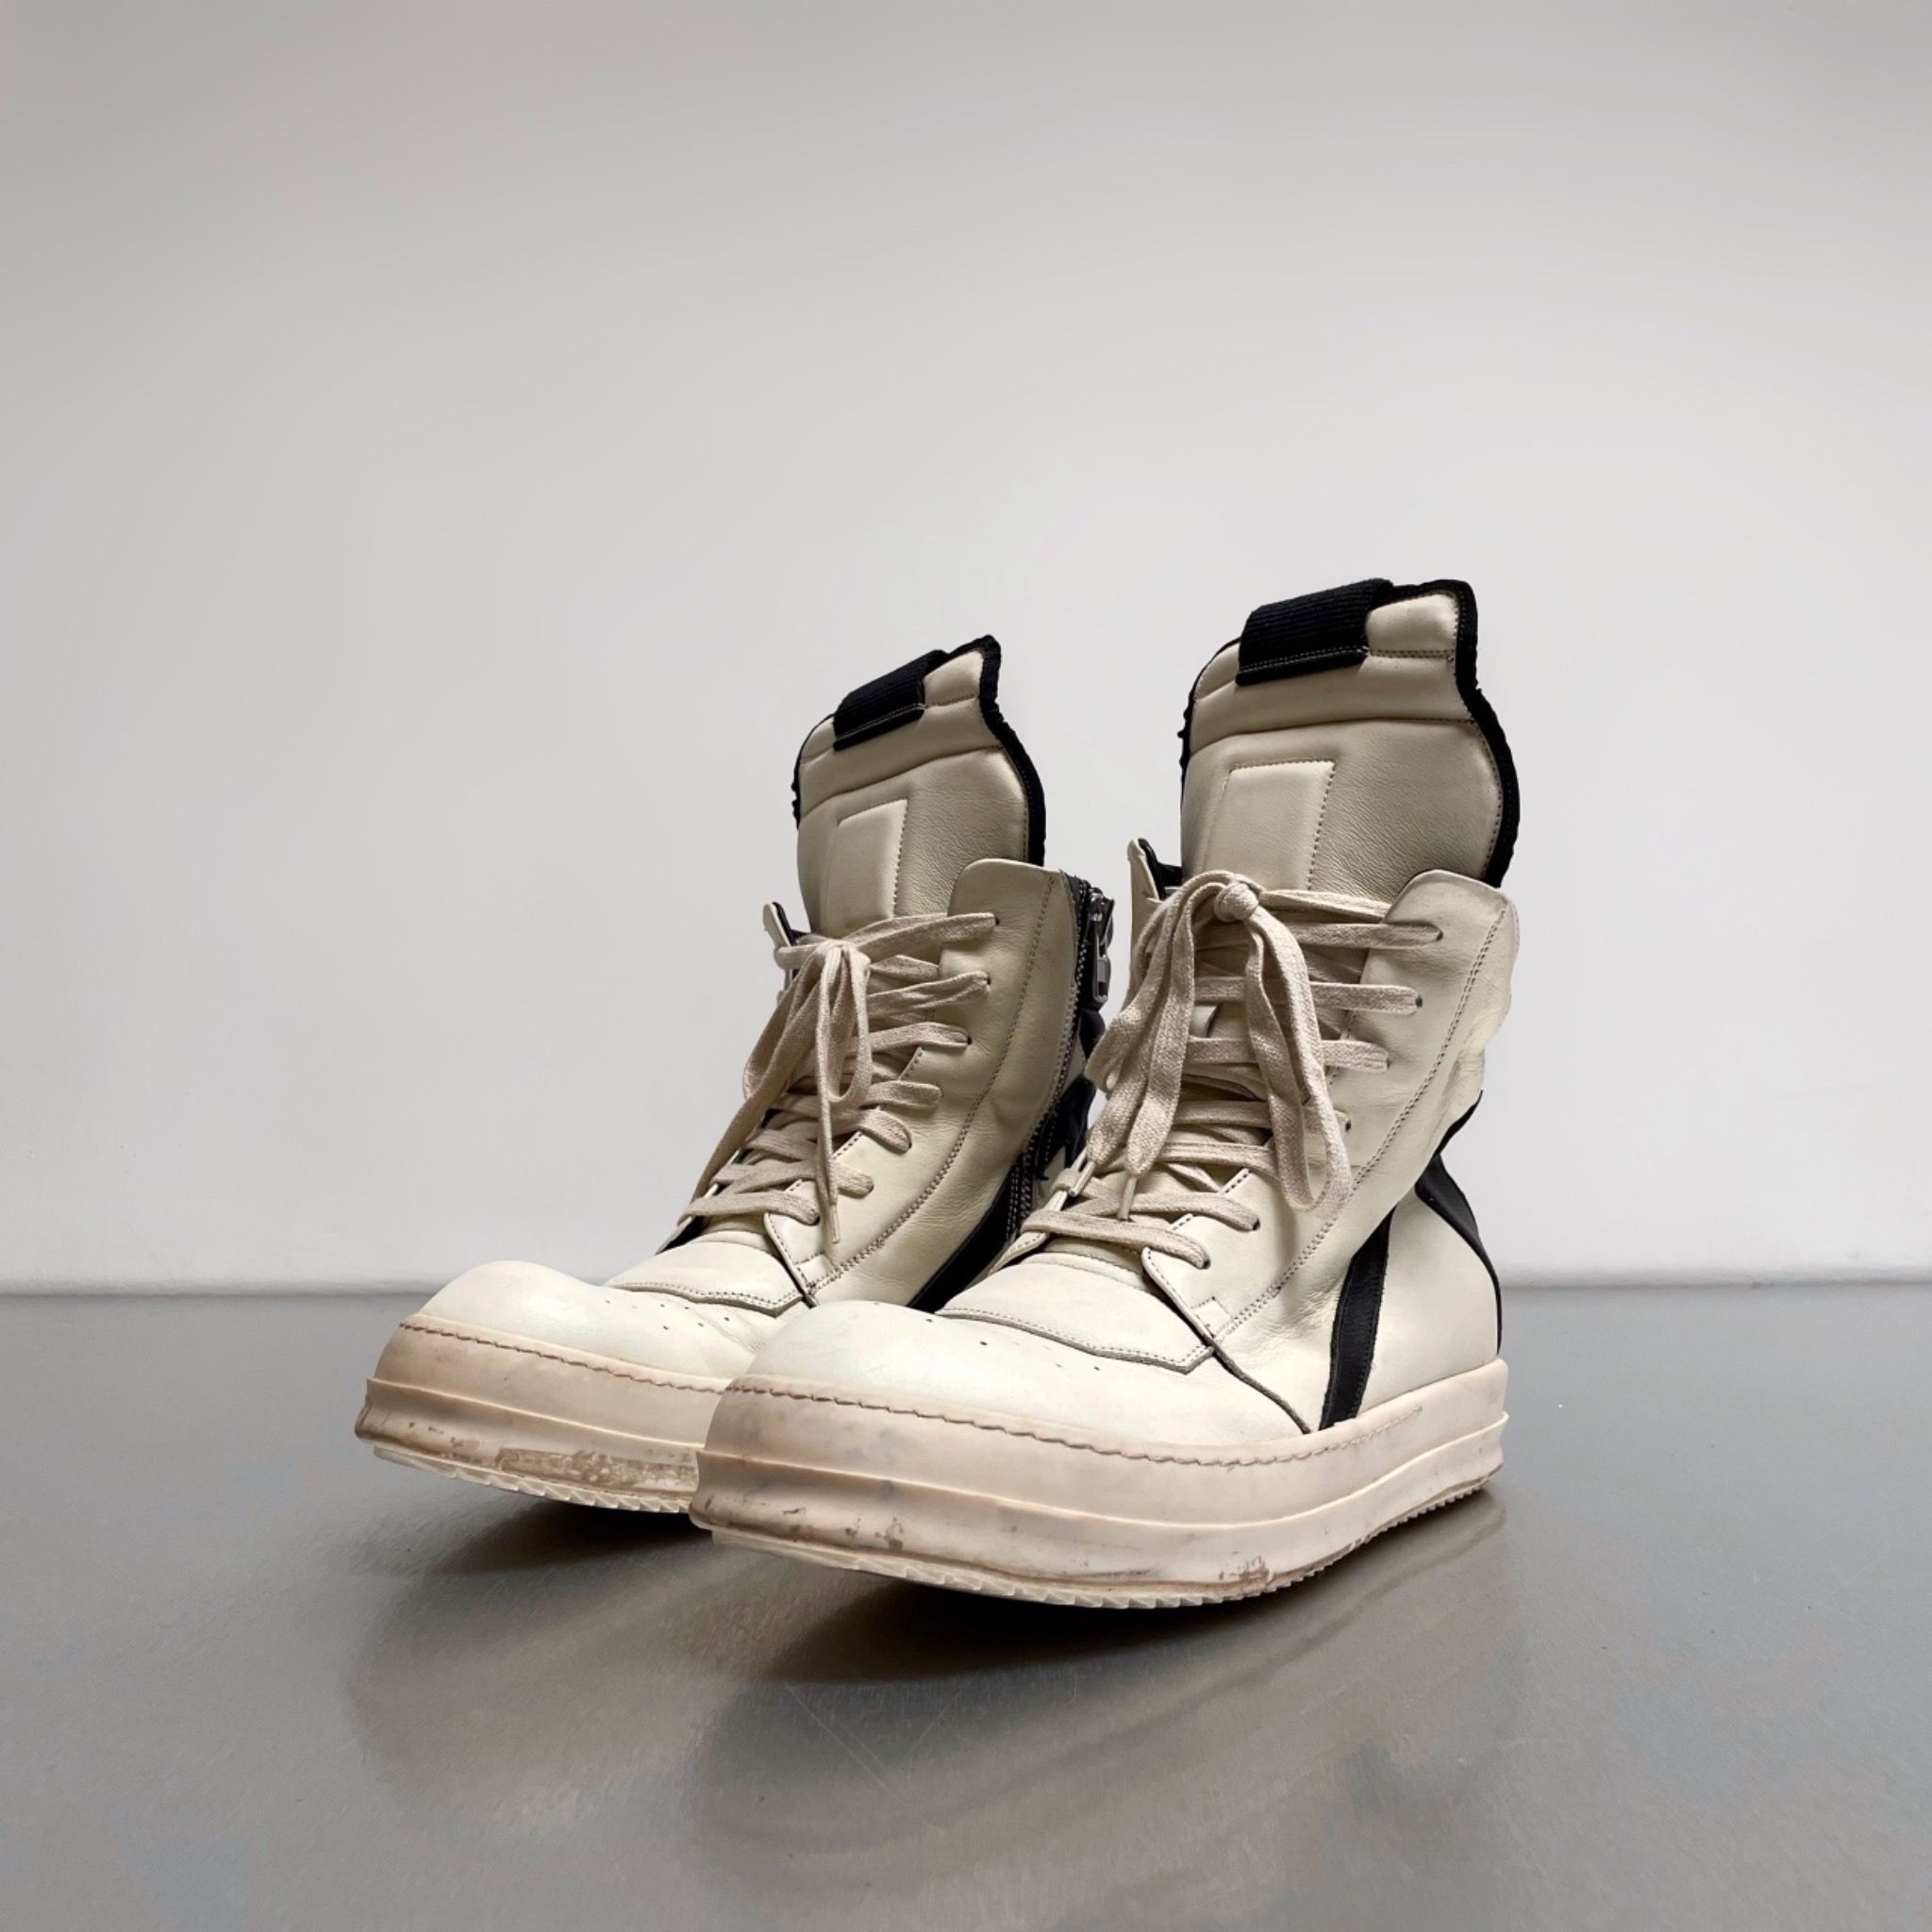 RICK OWEN – Around the shoess